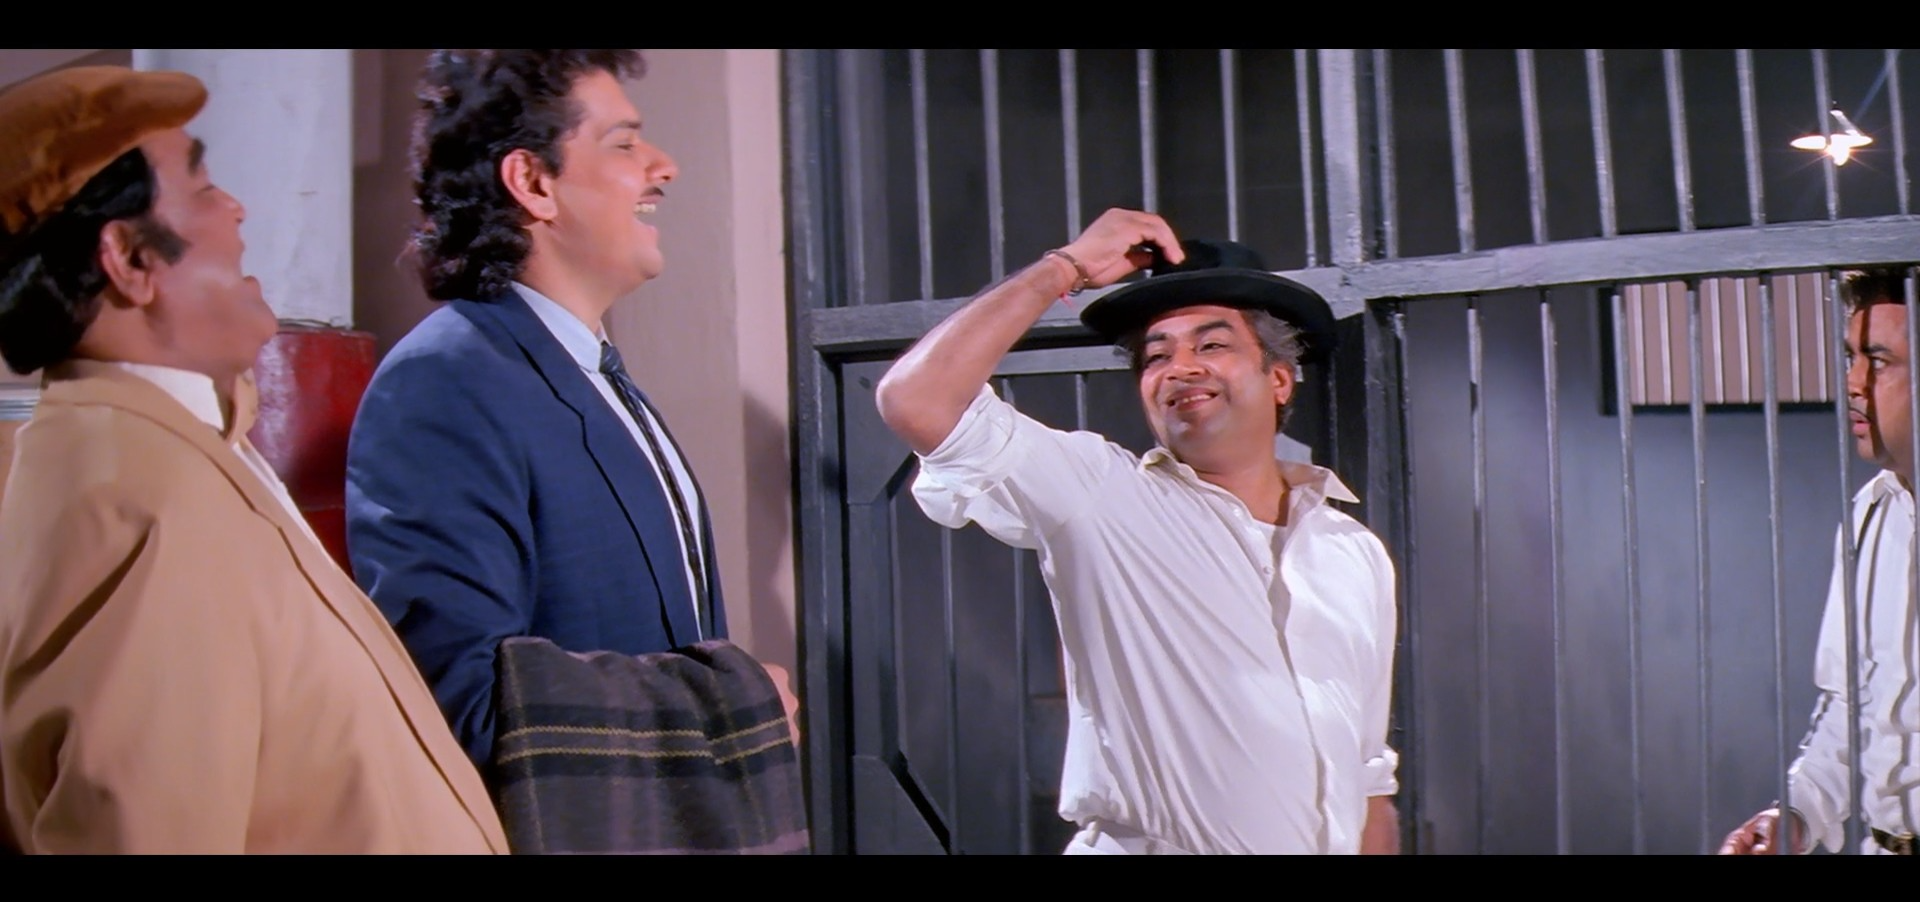 Ram Gopal Stuck behind a jail while Teja, Robert and Bhalla laugh